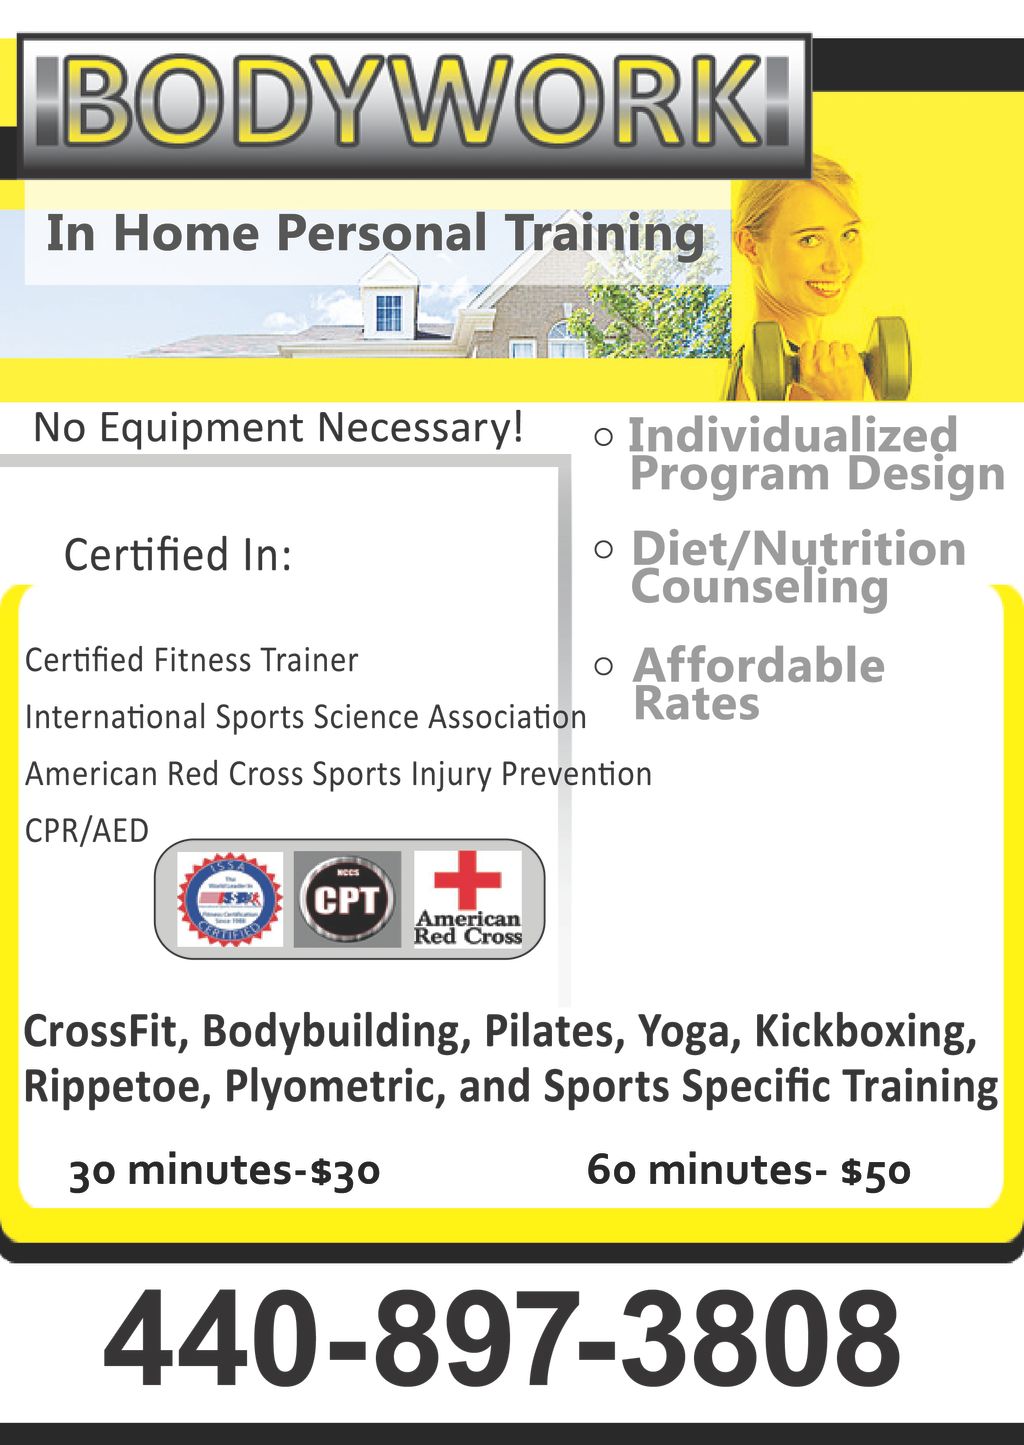 Body Work Personal Training